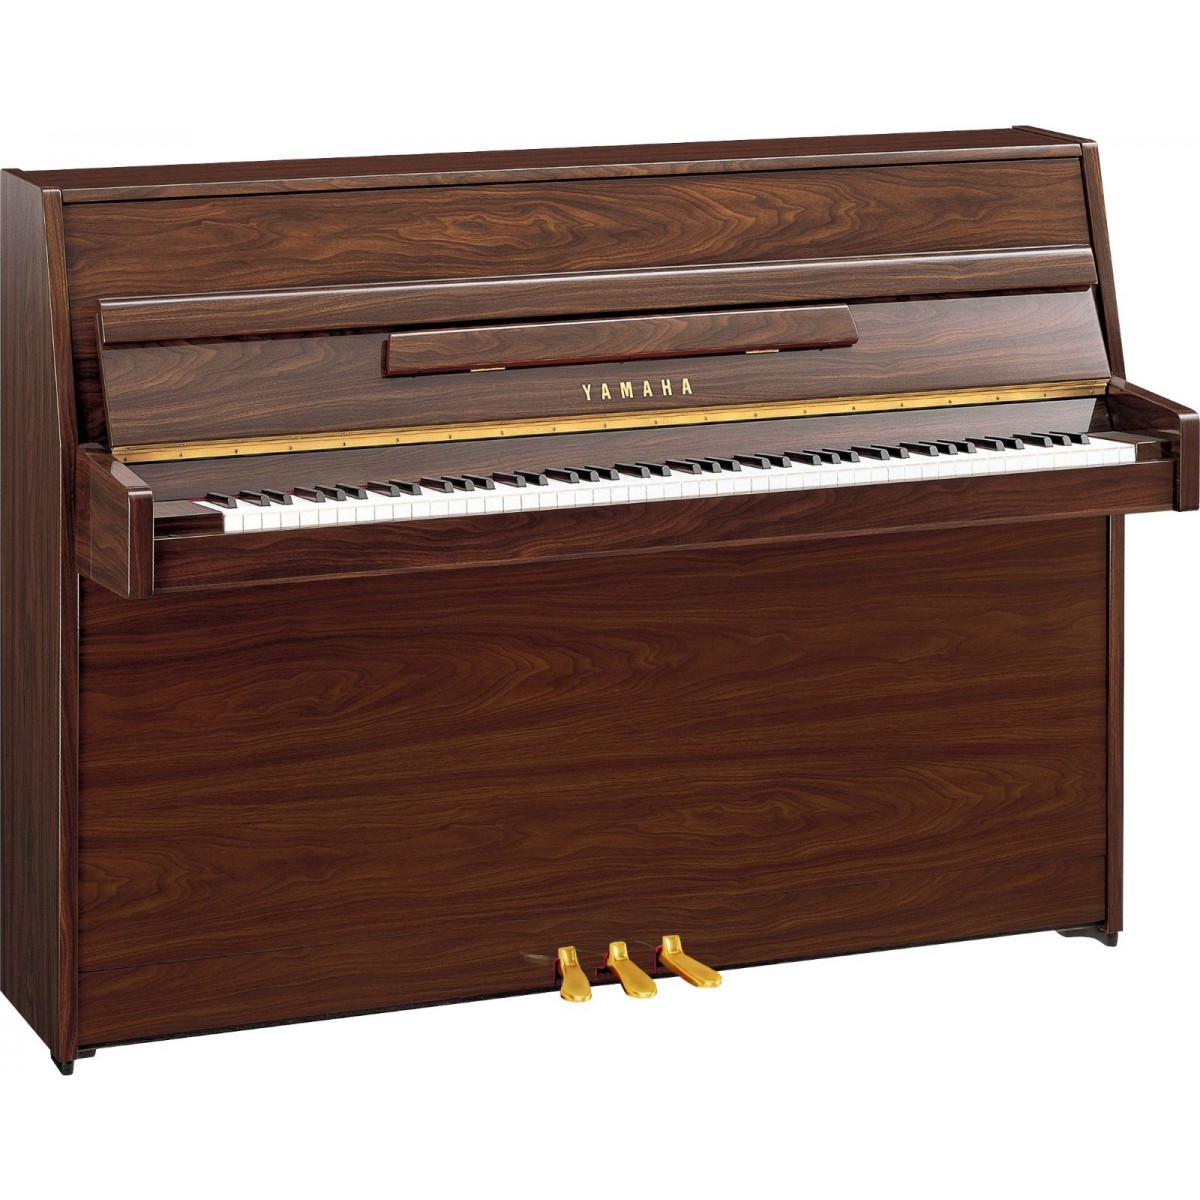 Yamaha B1 PW Klavier Nussbaum Walnut